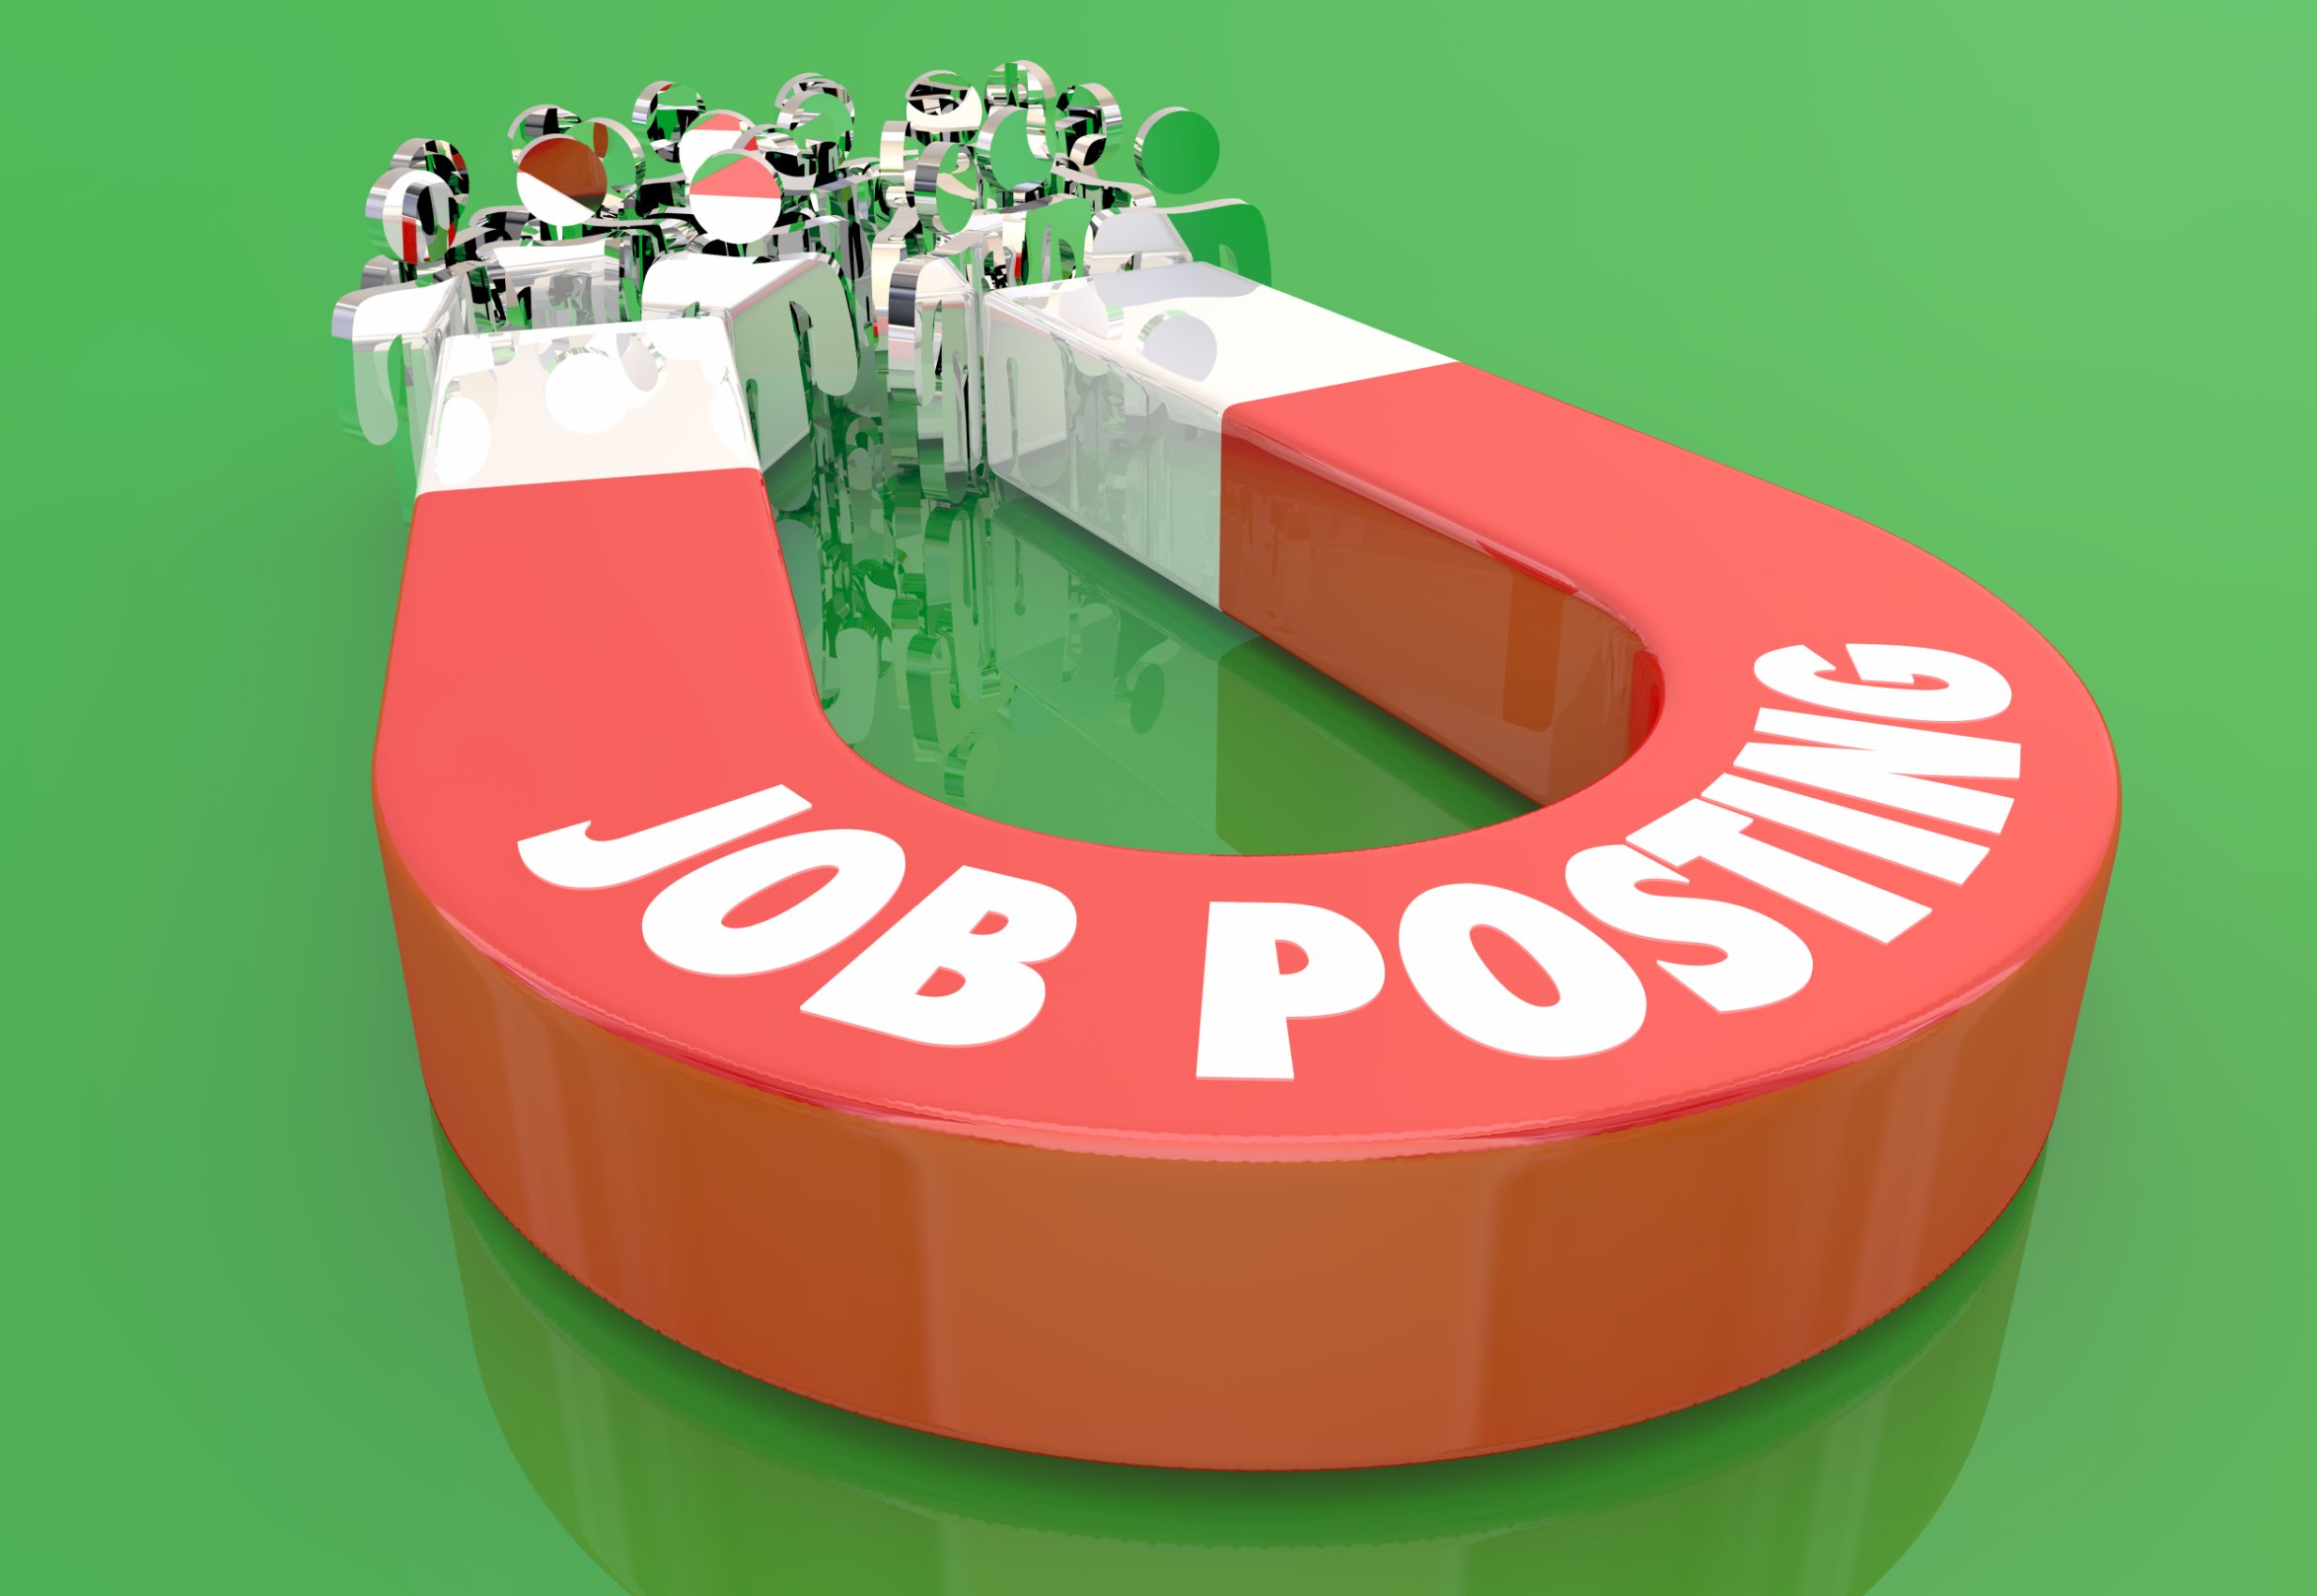 magnet attracting job candidates